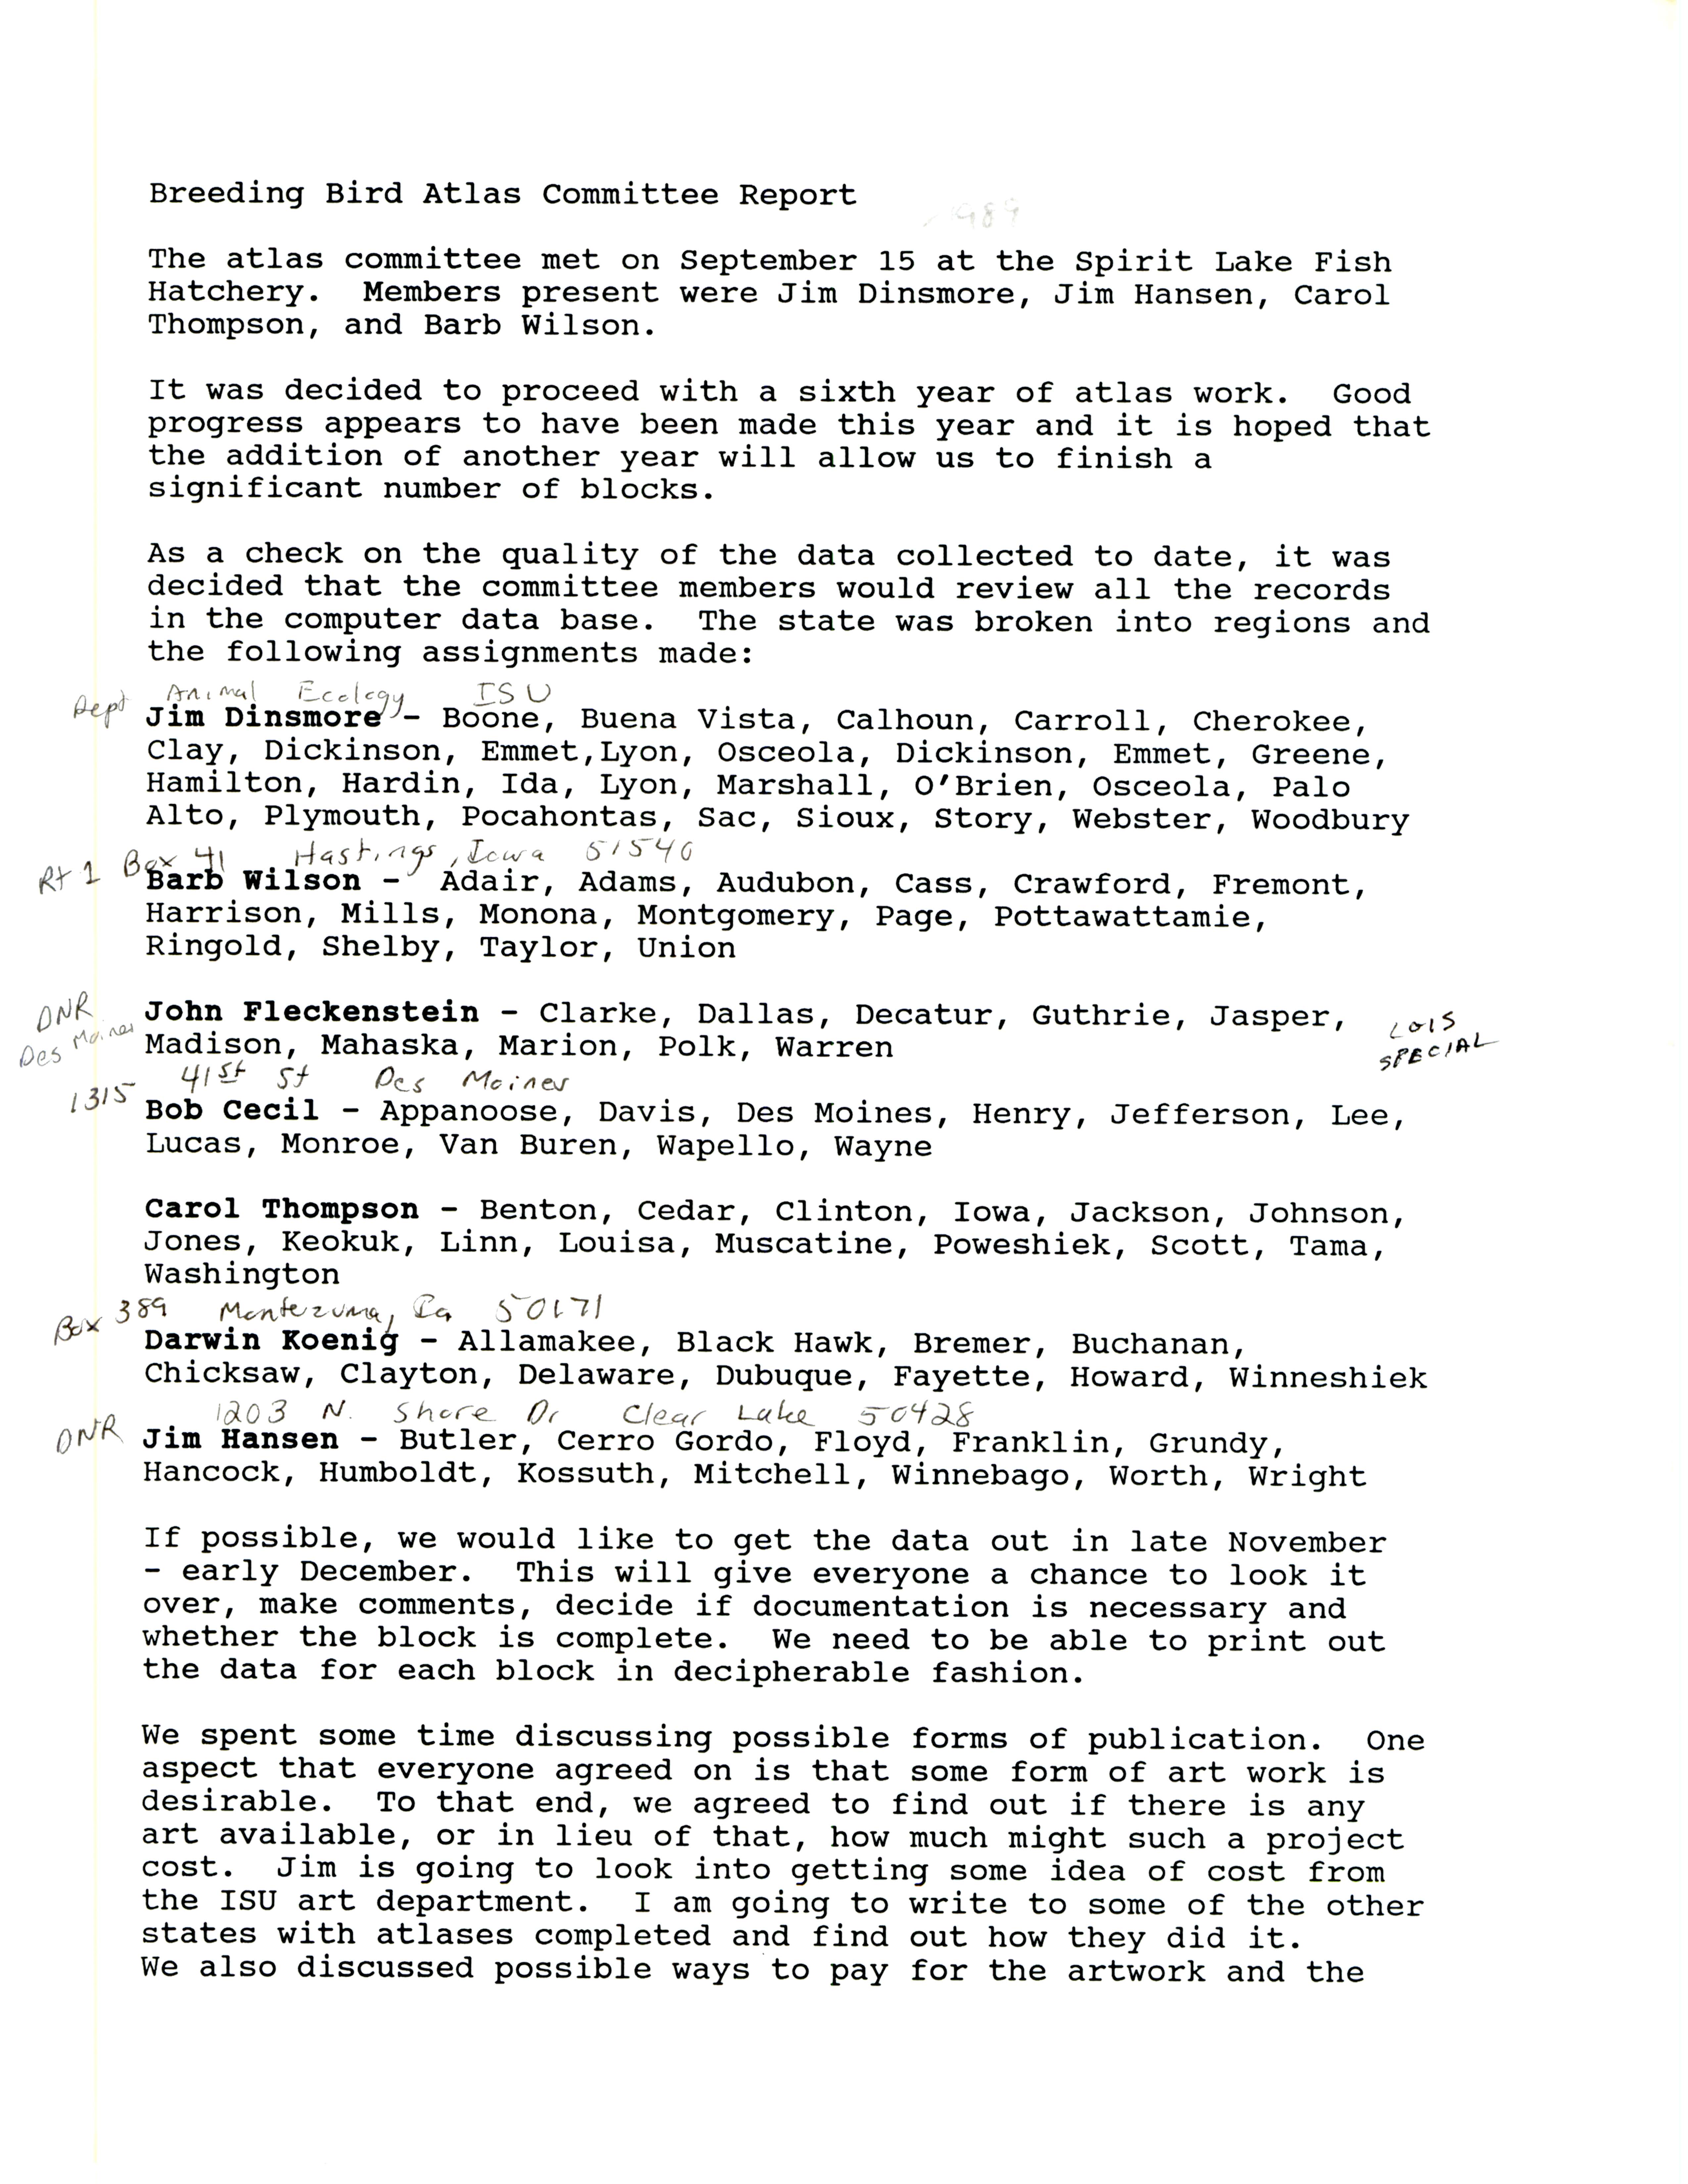 Breeding Bird Atlas Committee report, September 15, 1989